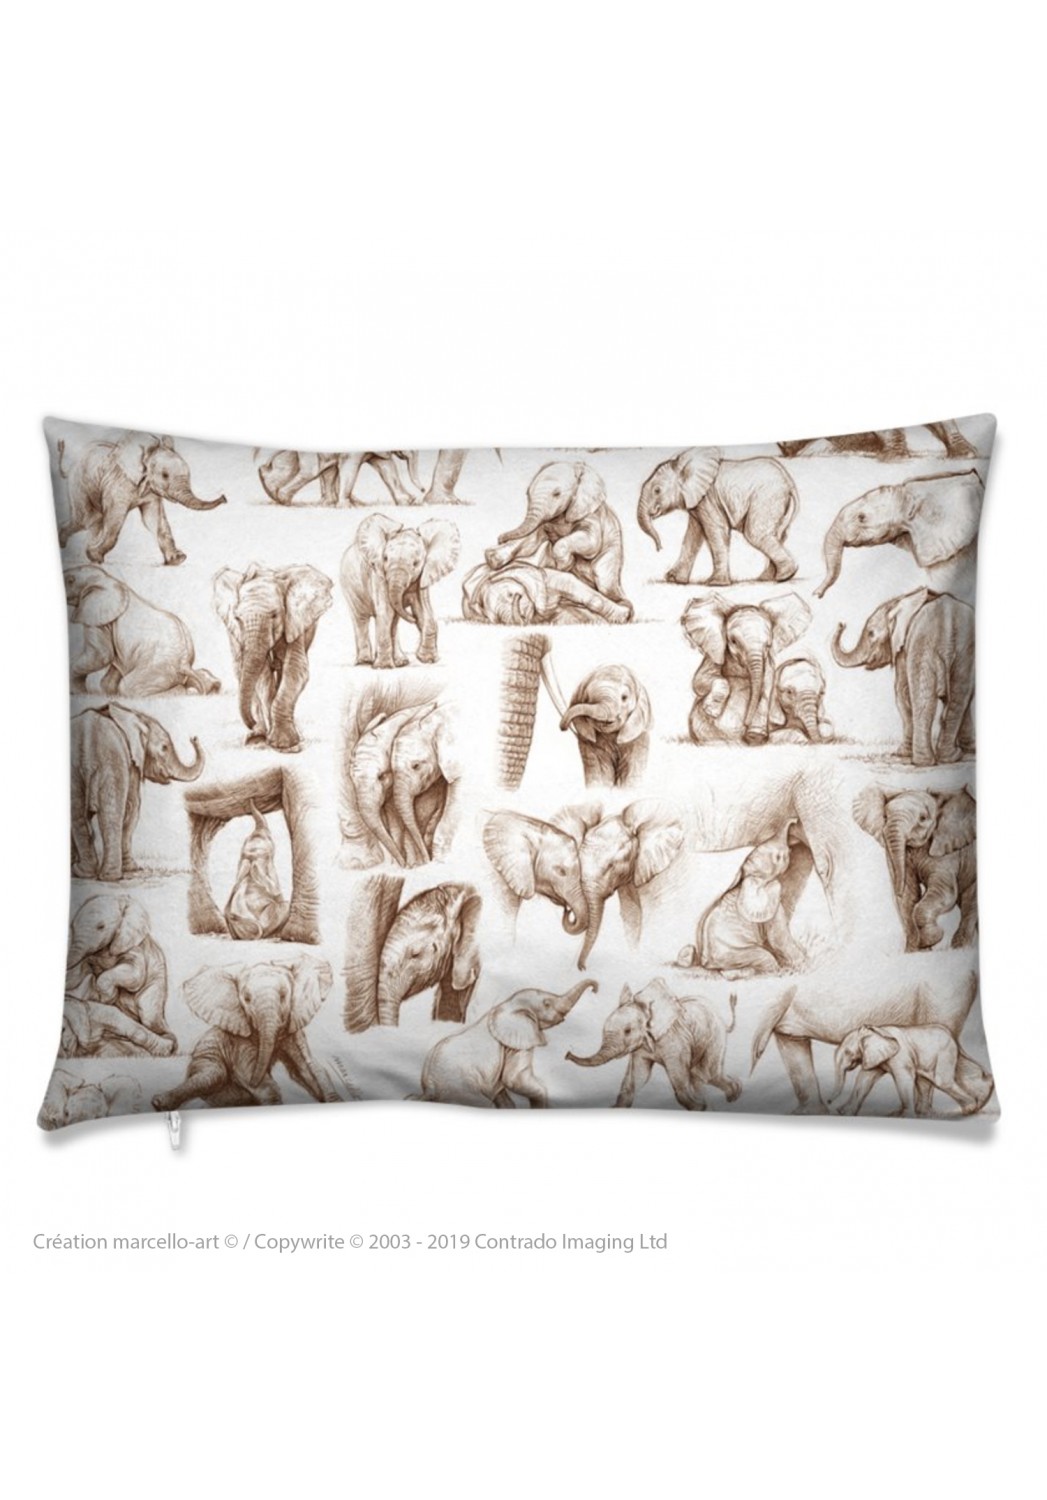 Marcello-art: Fashion accessory Cushion 392 elephant patchwork sépia